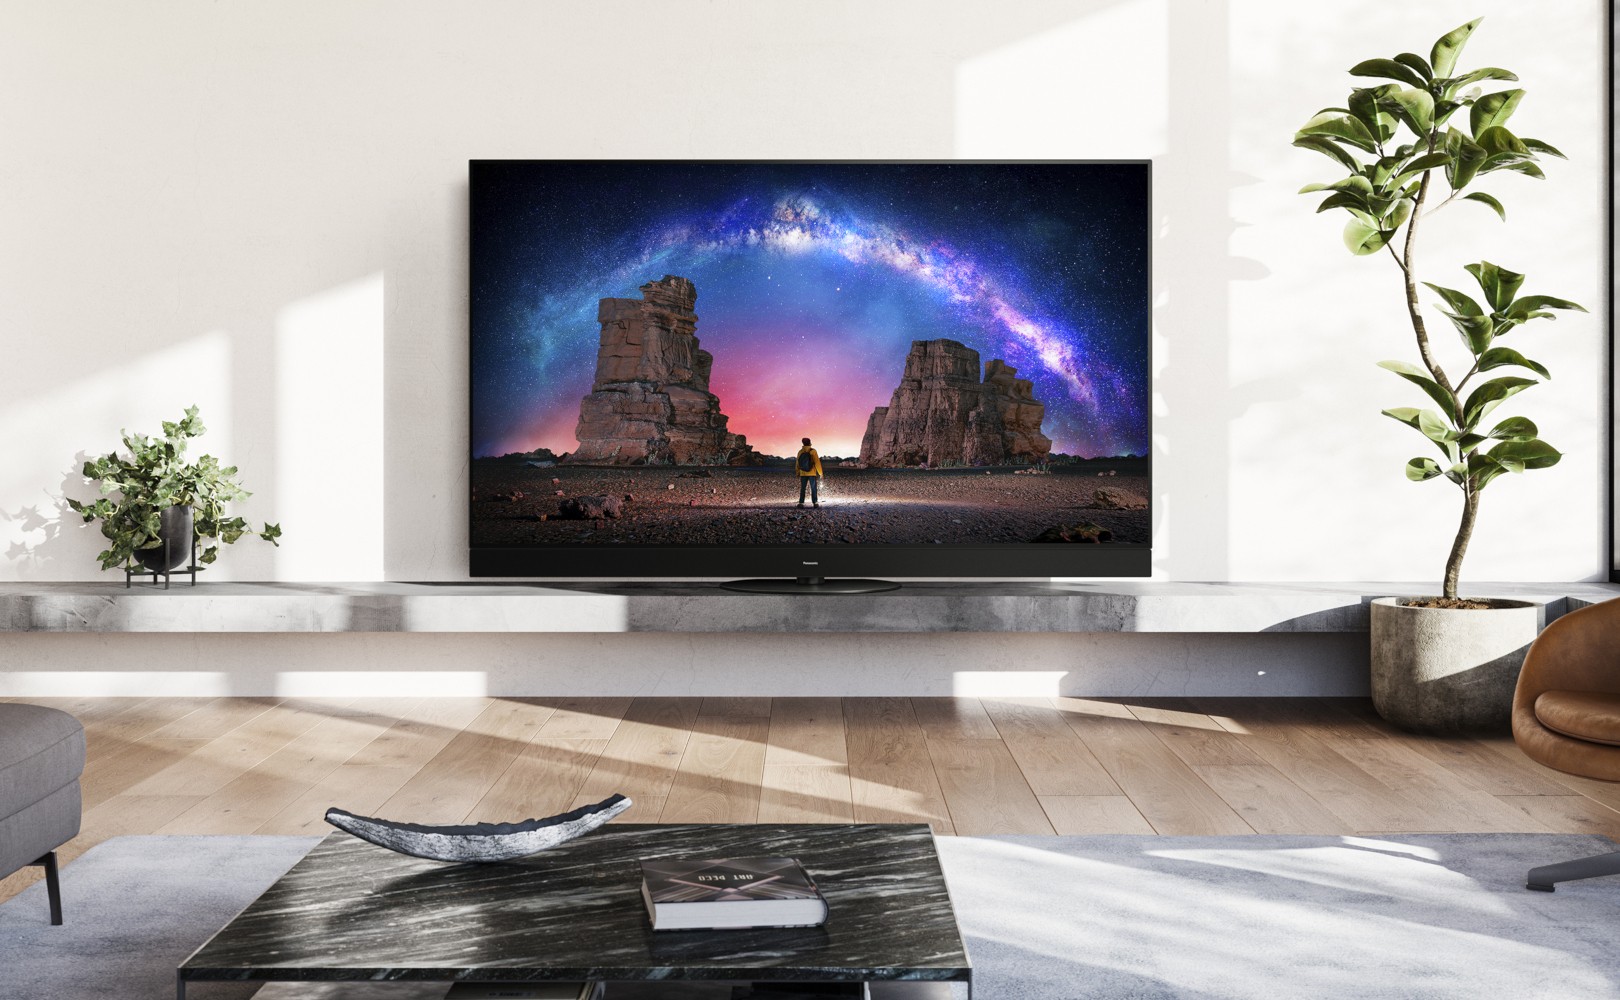 Panasonic MZ2000 Review: You will not regret buying this TV | Tech Week